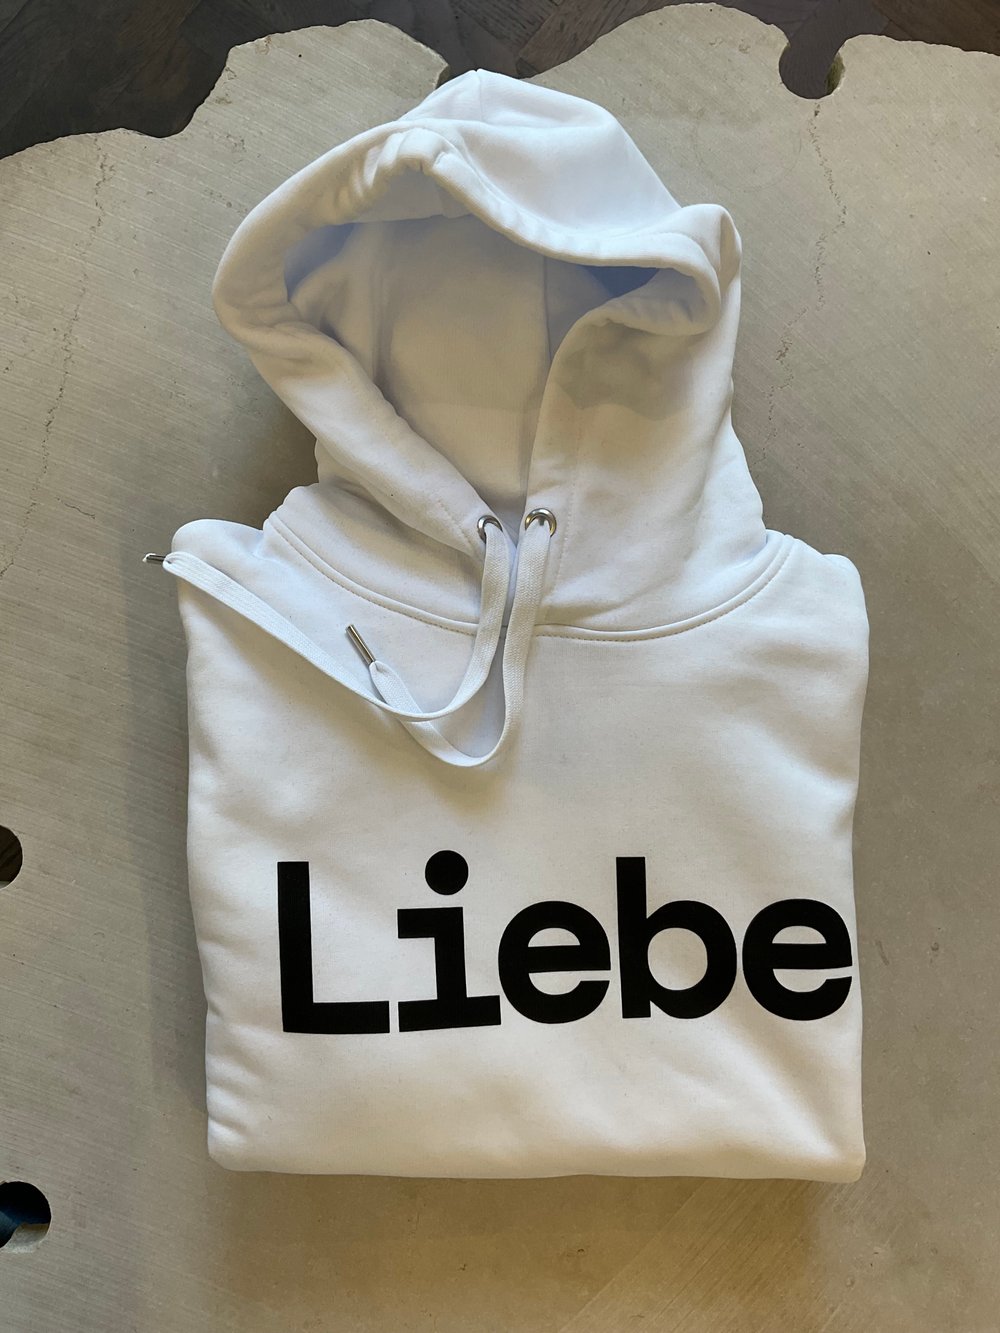 Liebe hoodie white with black Liebe